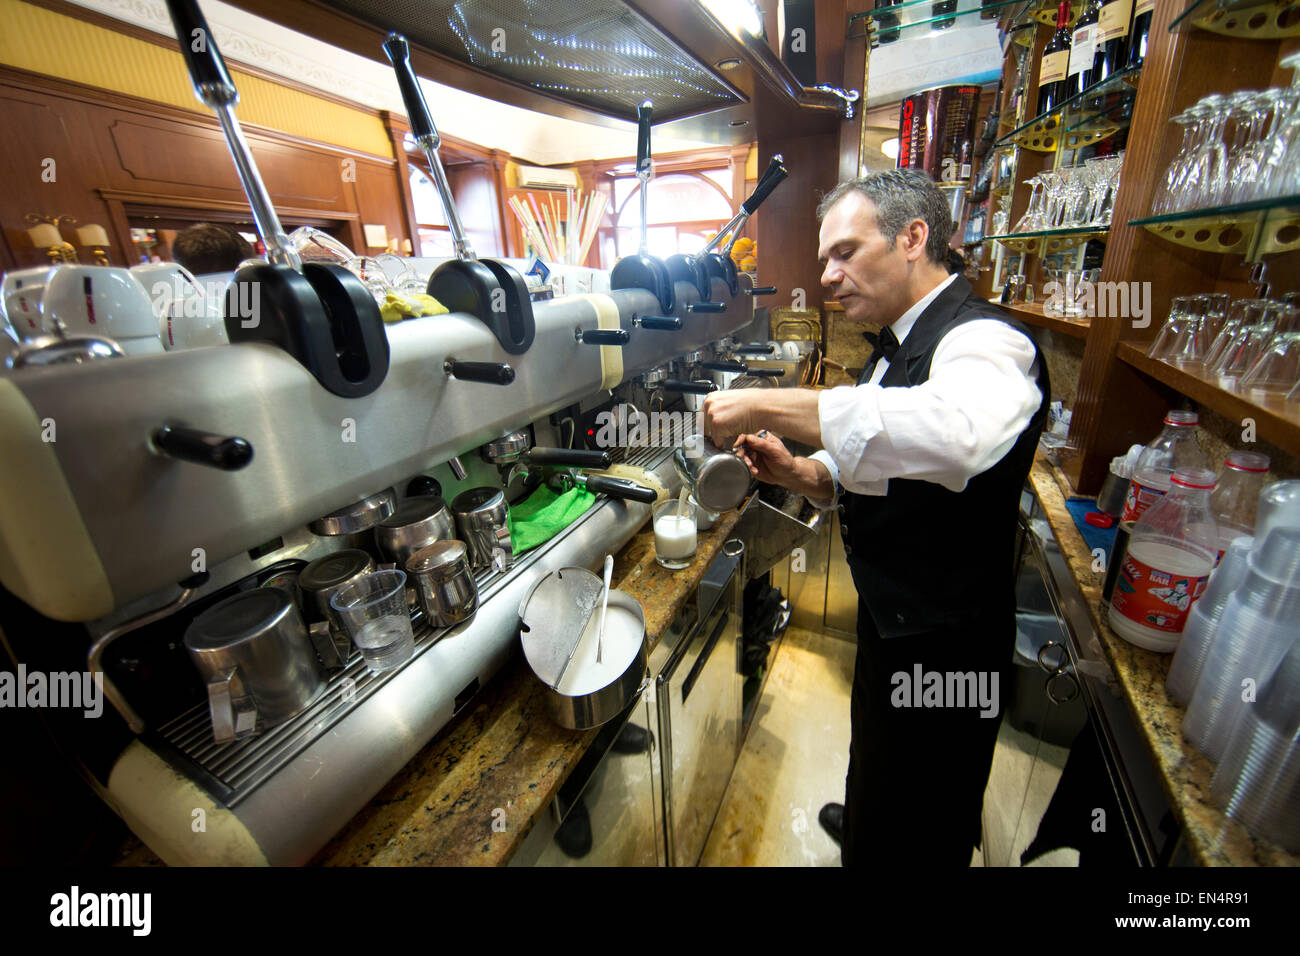 Senior coffee maker a Garaldi Caffe, situato in Piazza garita Foto Stock